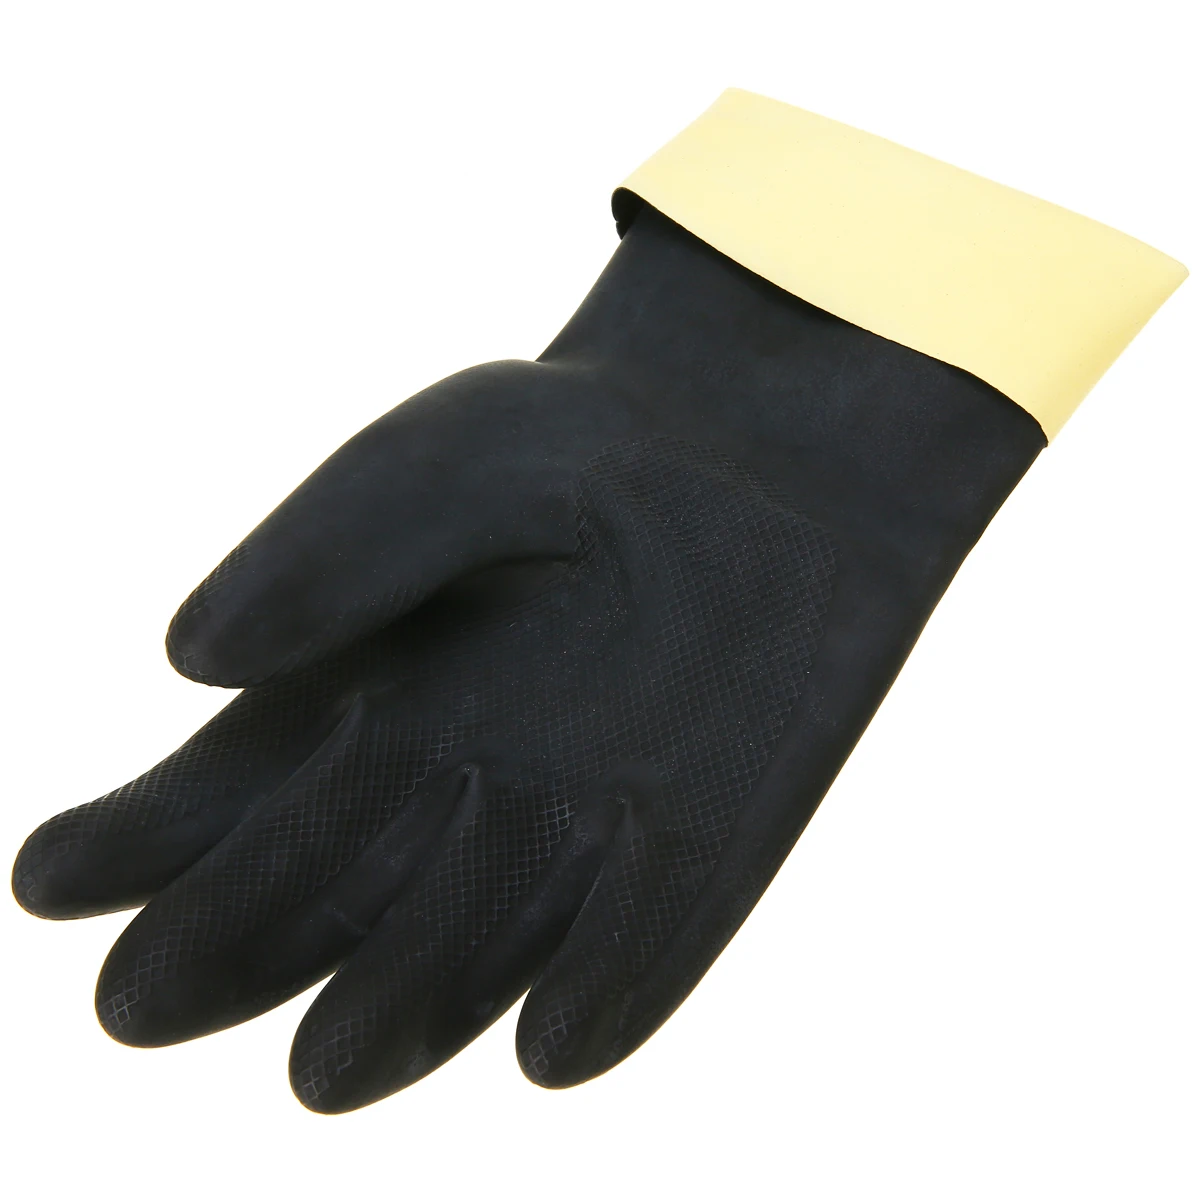 Mayitr Heavy Duty Natural Rubber Garden Gloves Acid Alkali Resistant Chemical Gauntlet Gardening Protective Household Gloves